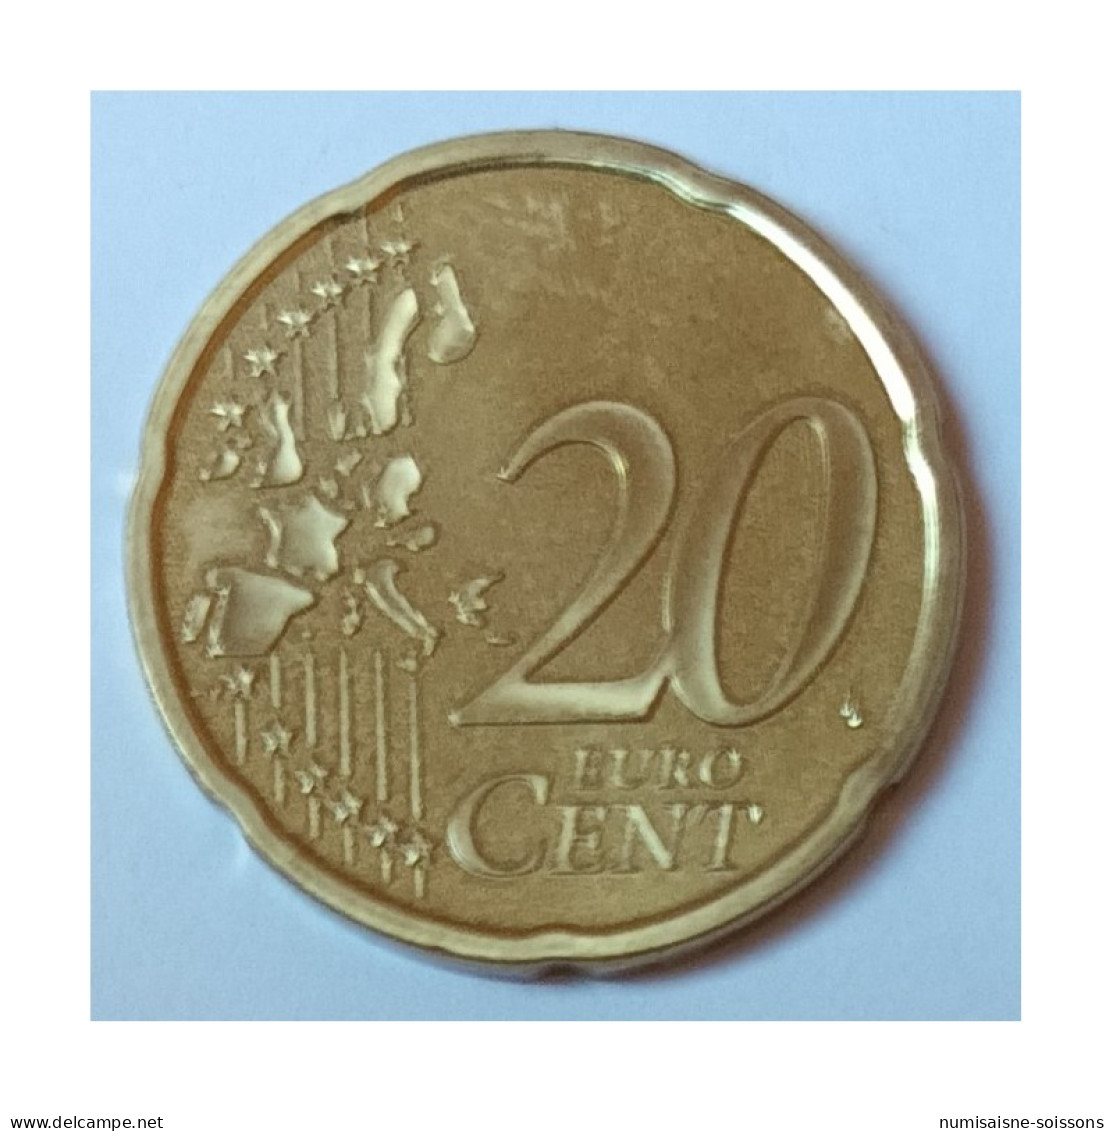 FRANCE - KM 1286 - 20 EURO CENT 2003 - SEMEUSE - BE - France